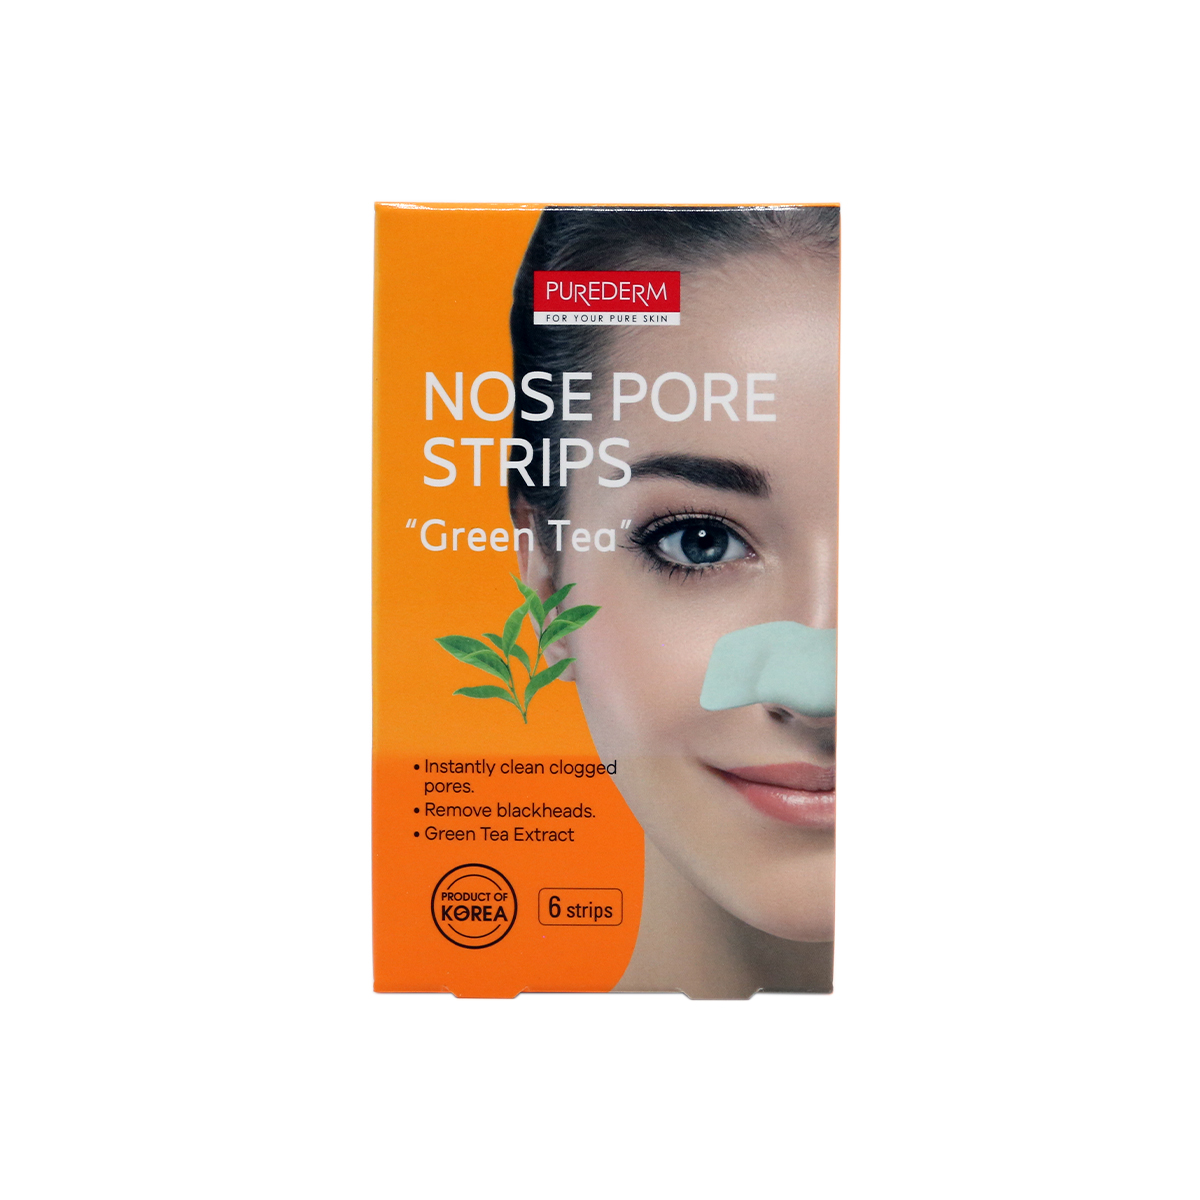 15-8809052586539-PU-ADS261 -Pure Derm Nose Pore Strips – Green Tea 6strips 1